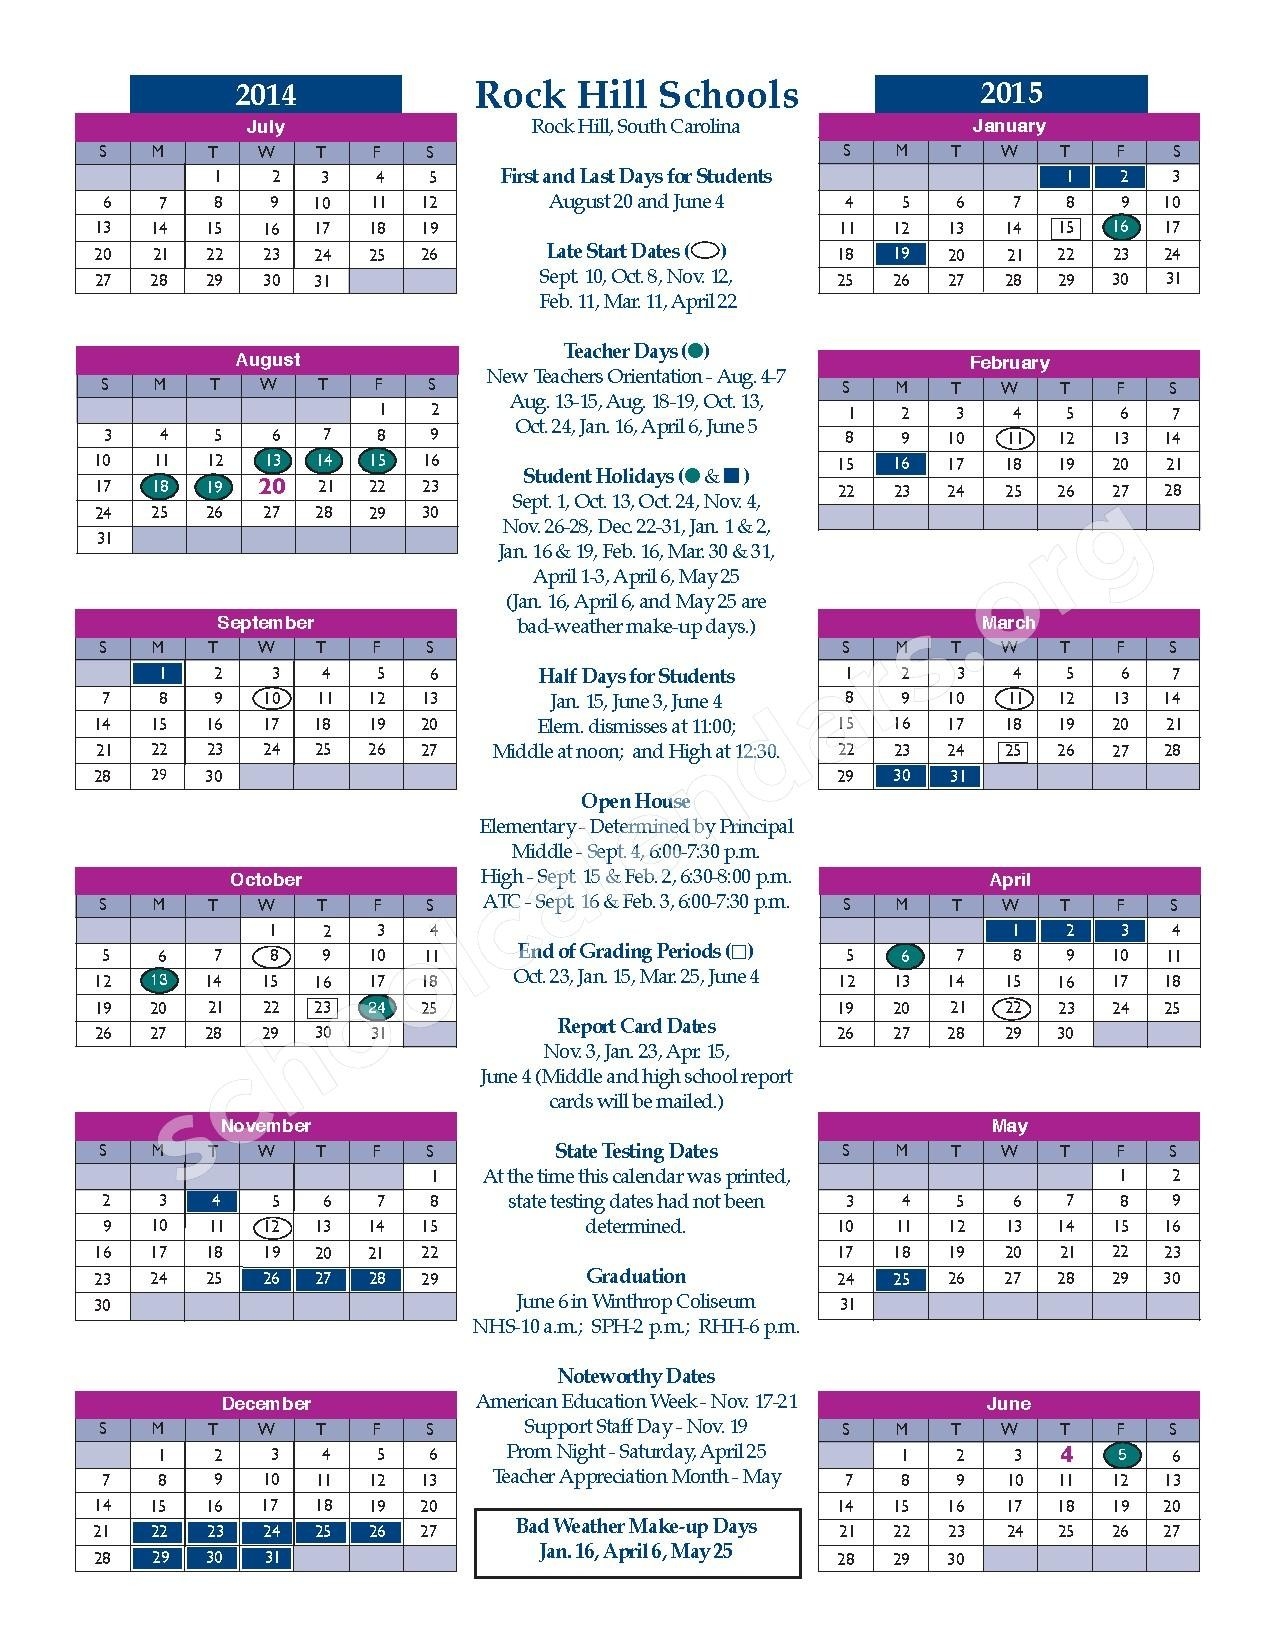 Rock Hill School District Calendar Qualads